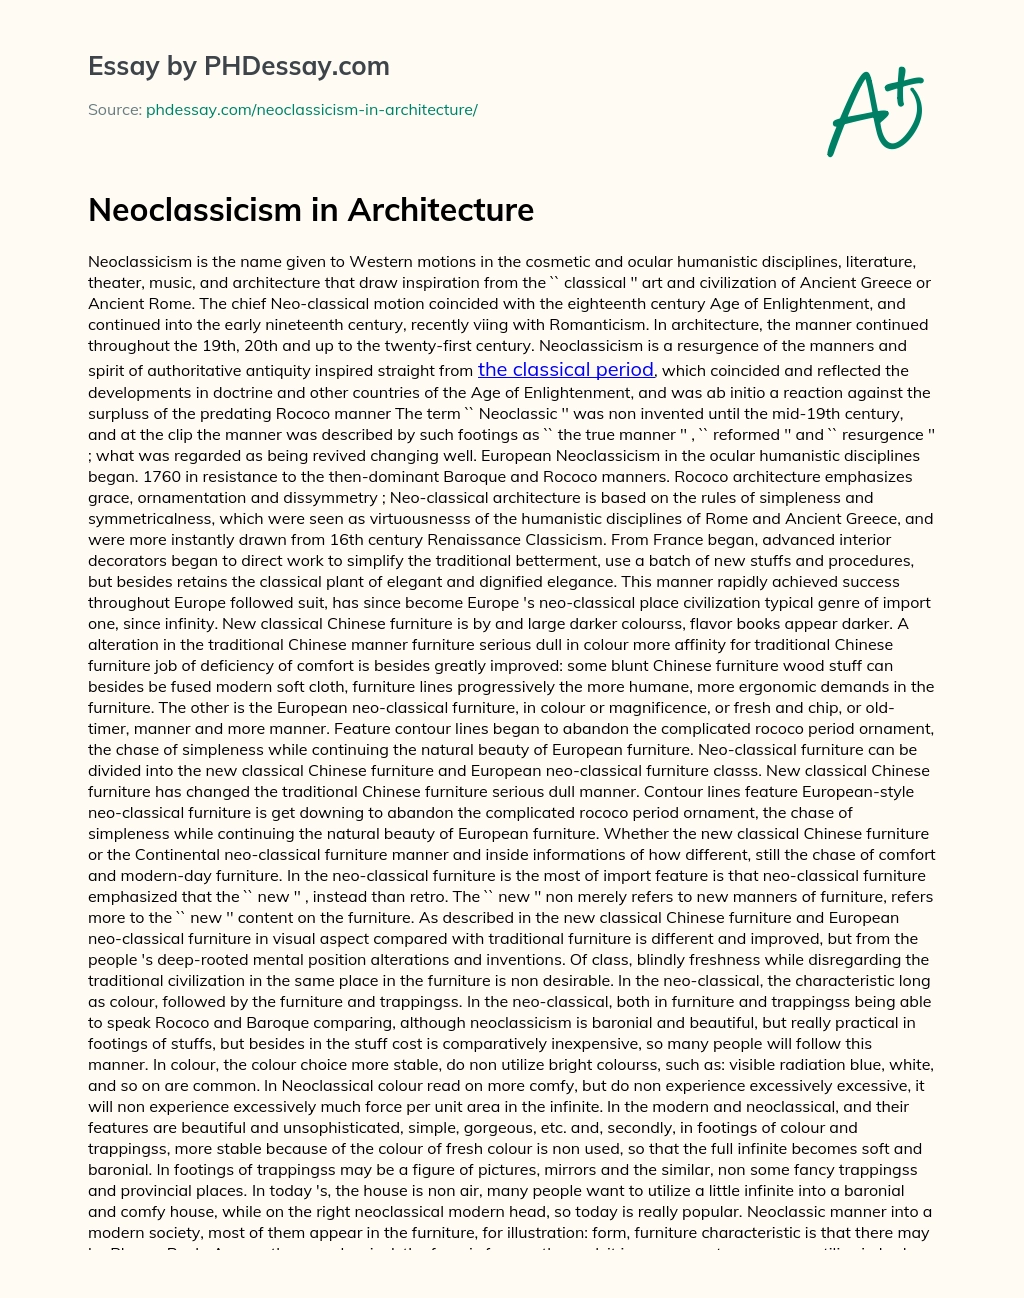 Neoclassicism in Architecture essay